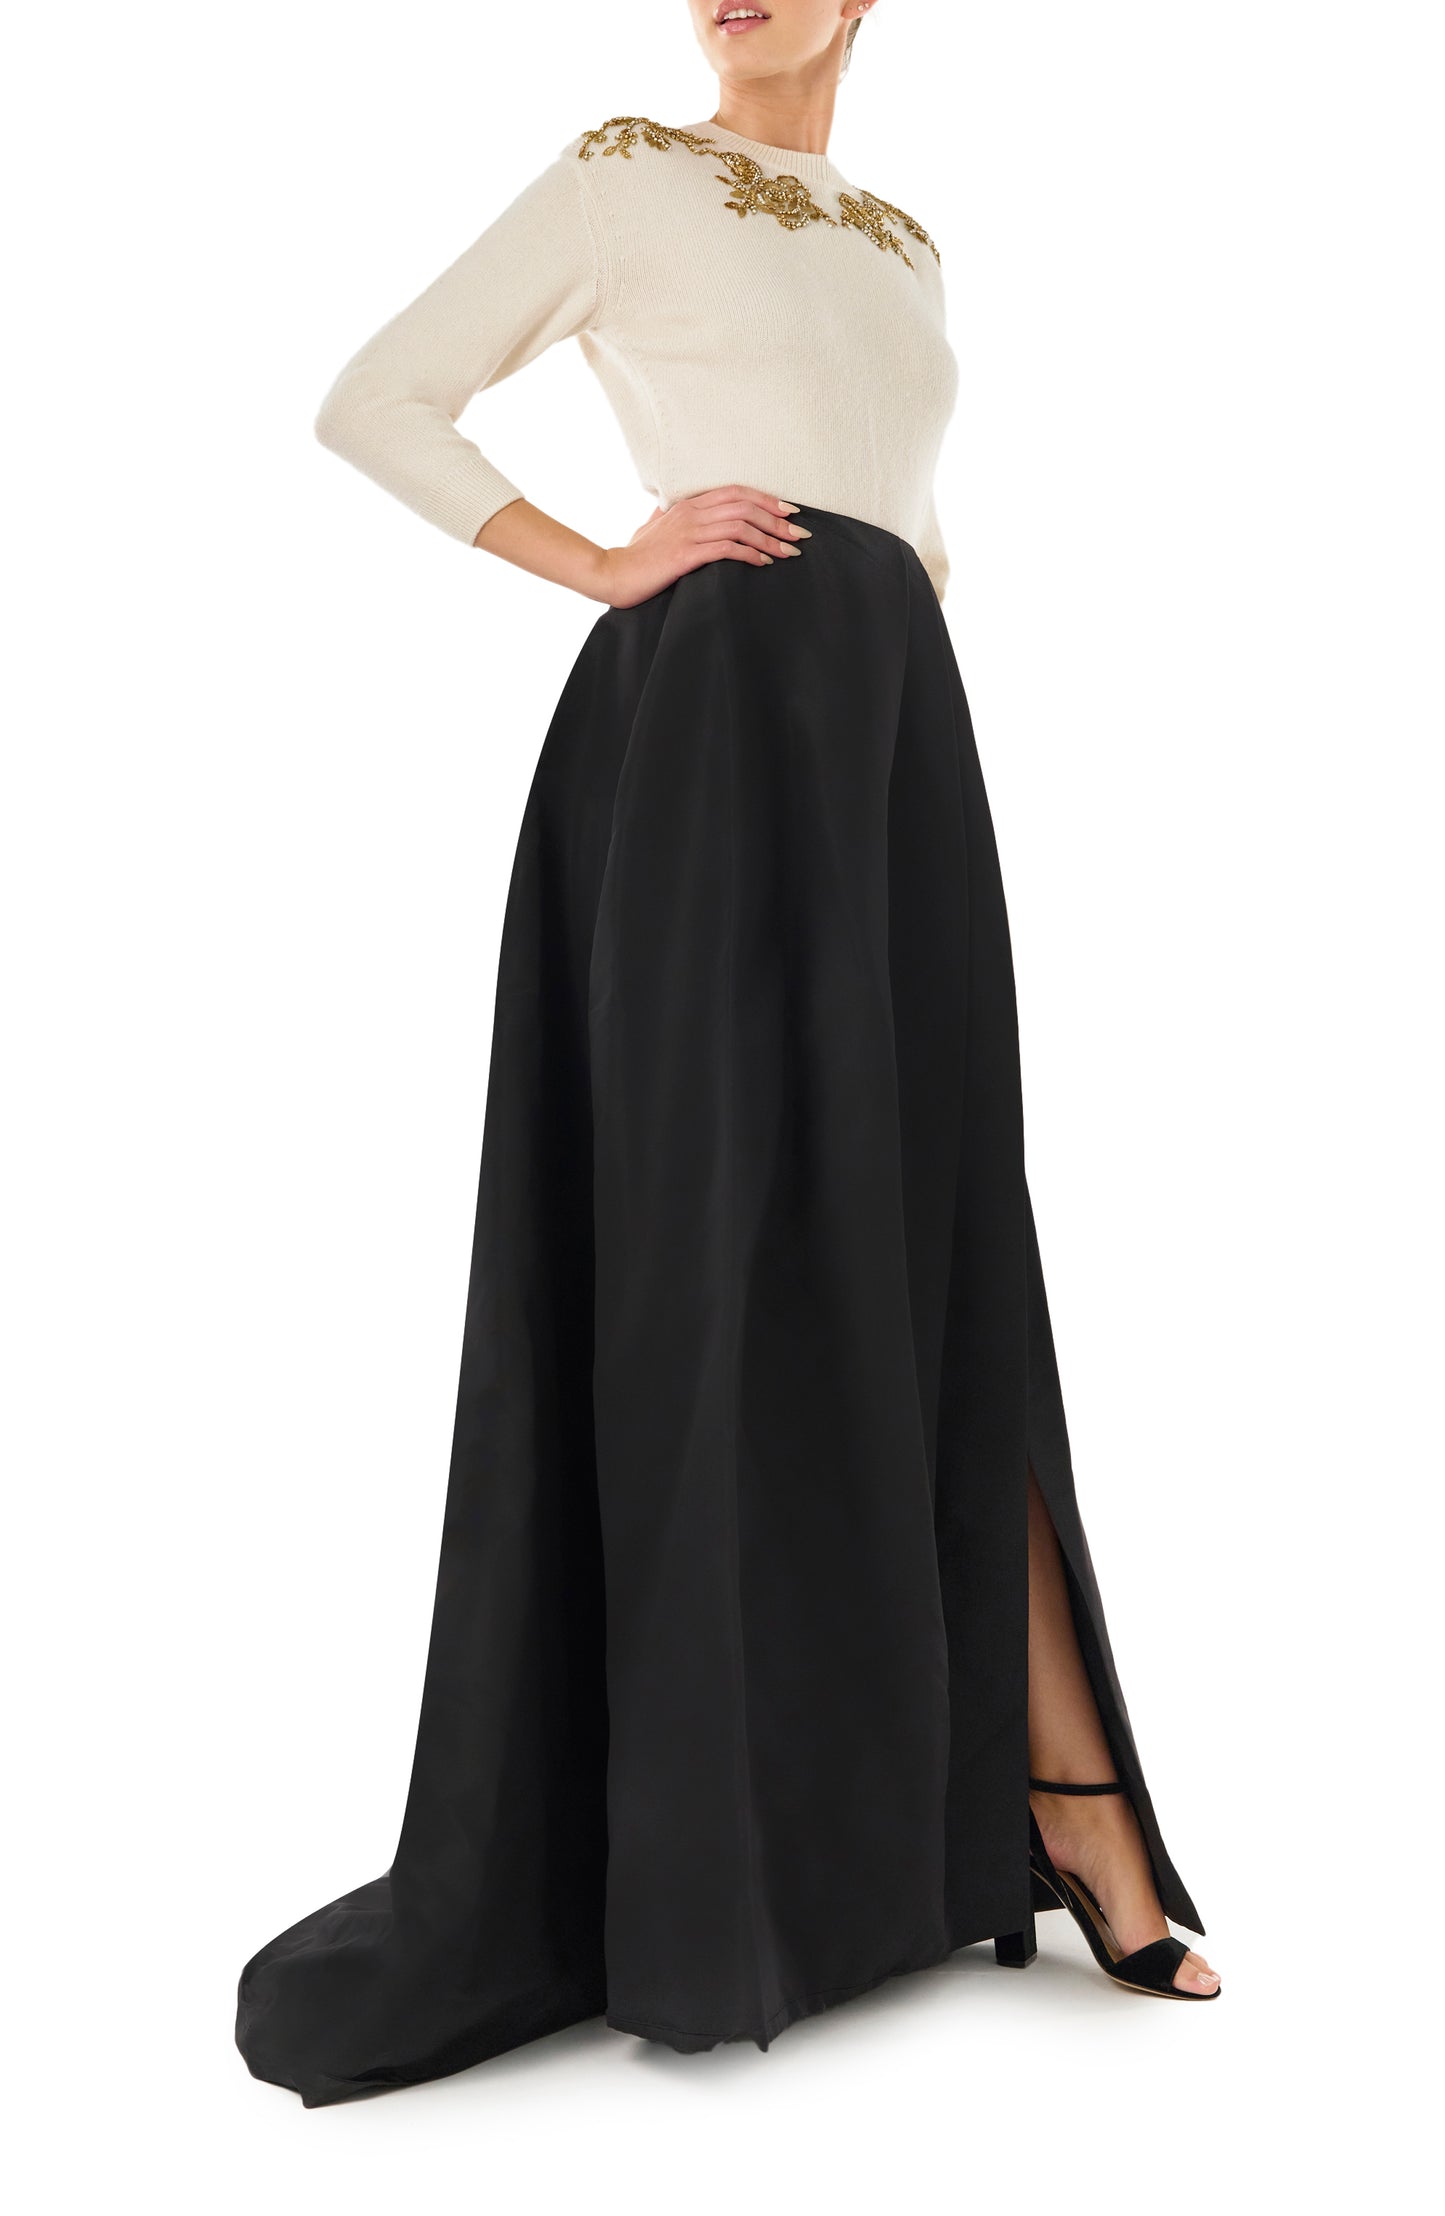 Monique Lhuillier black silk faille ball skirt with high leg slit.